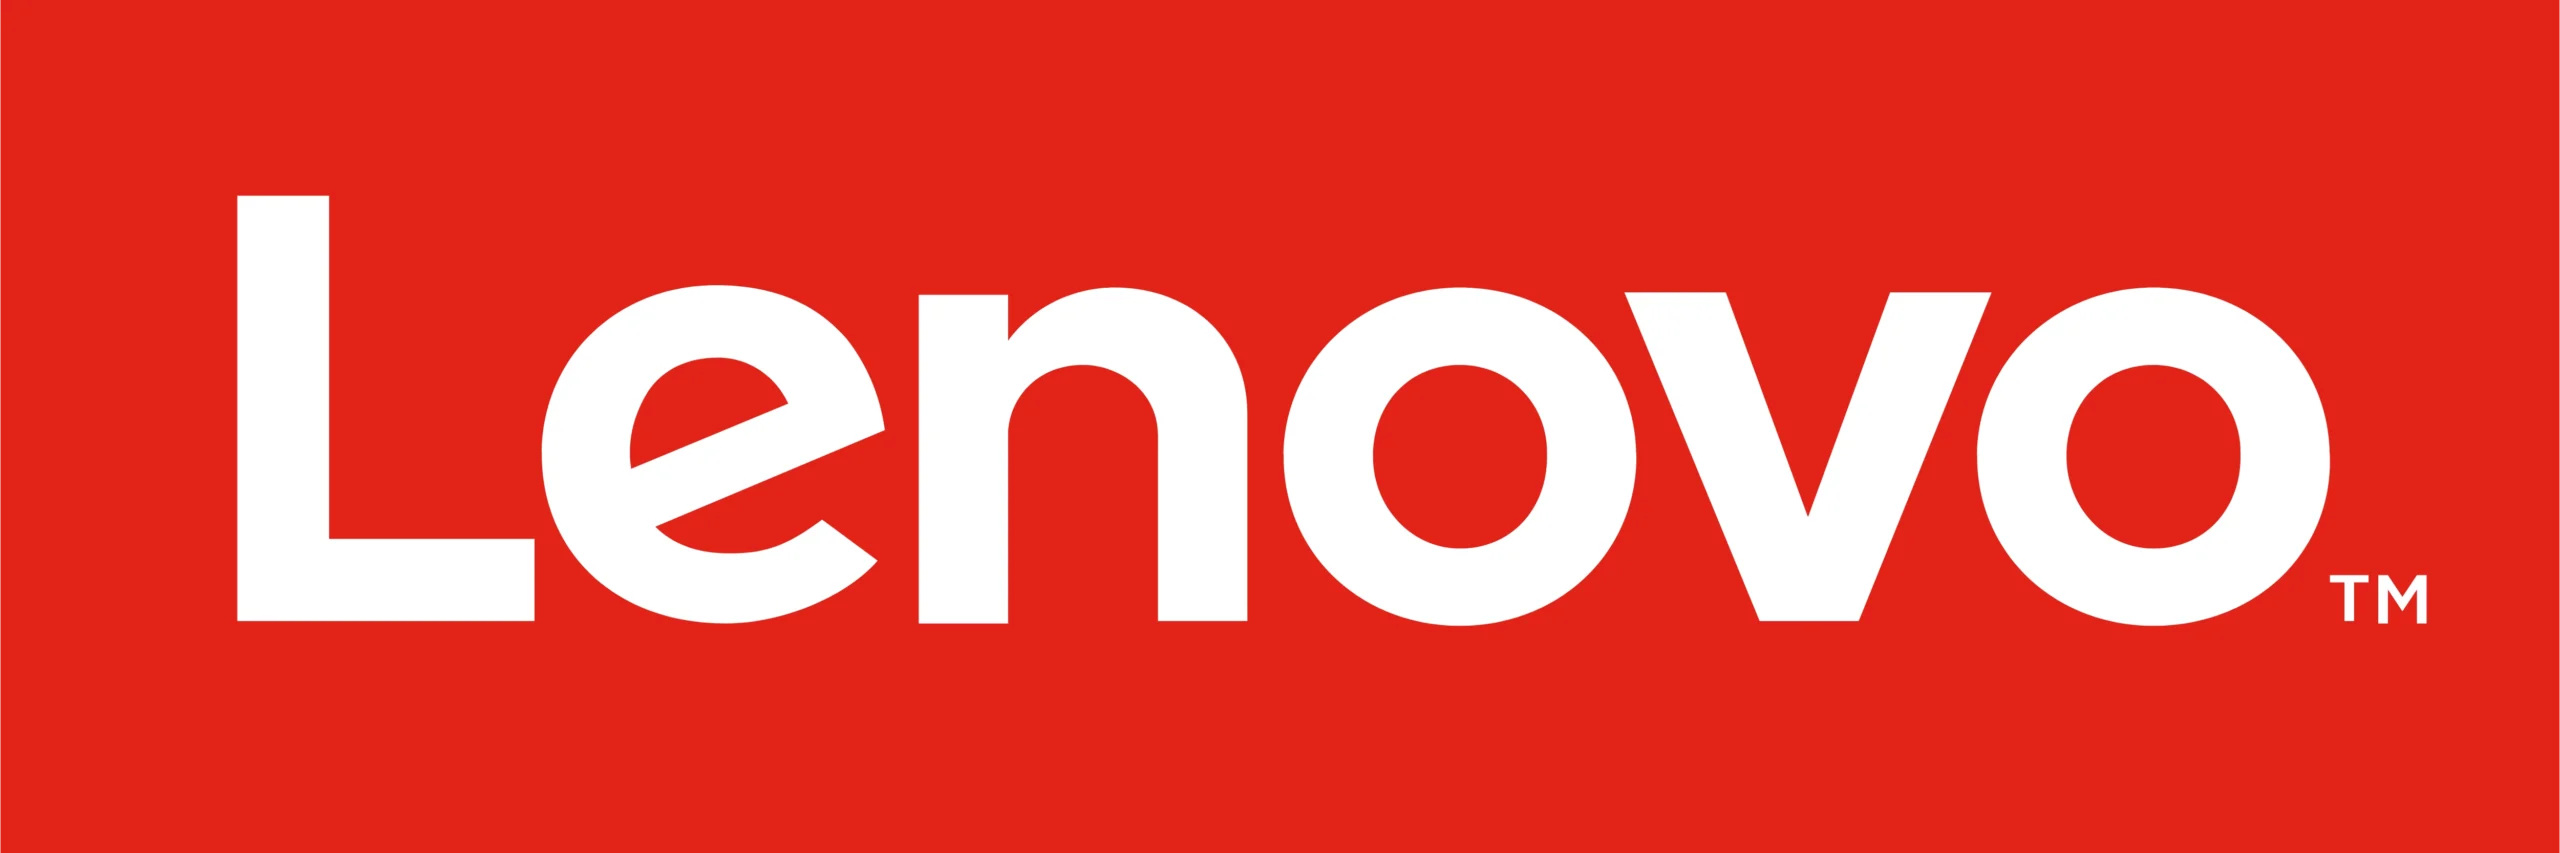 Red Lenovo logo.